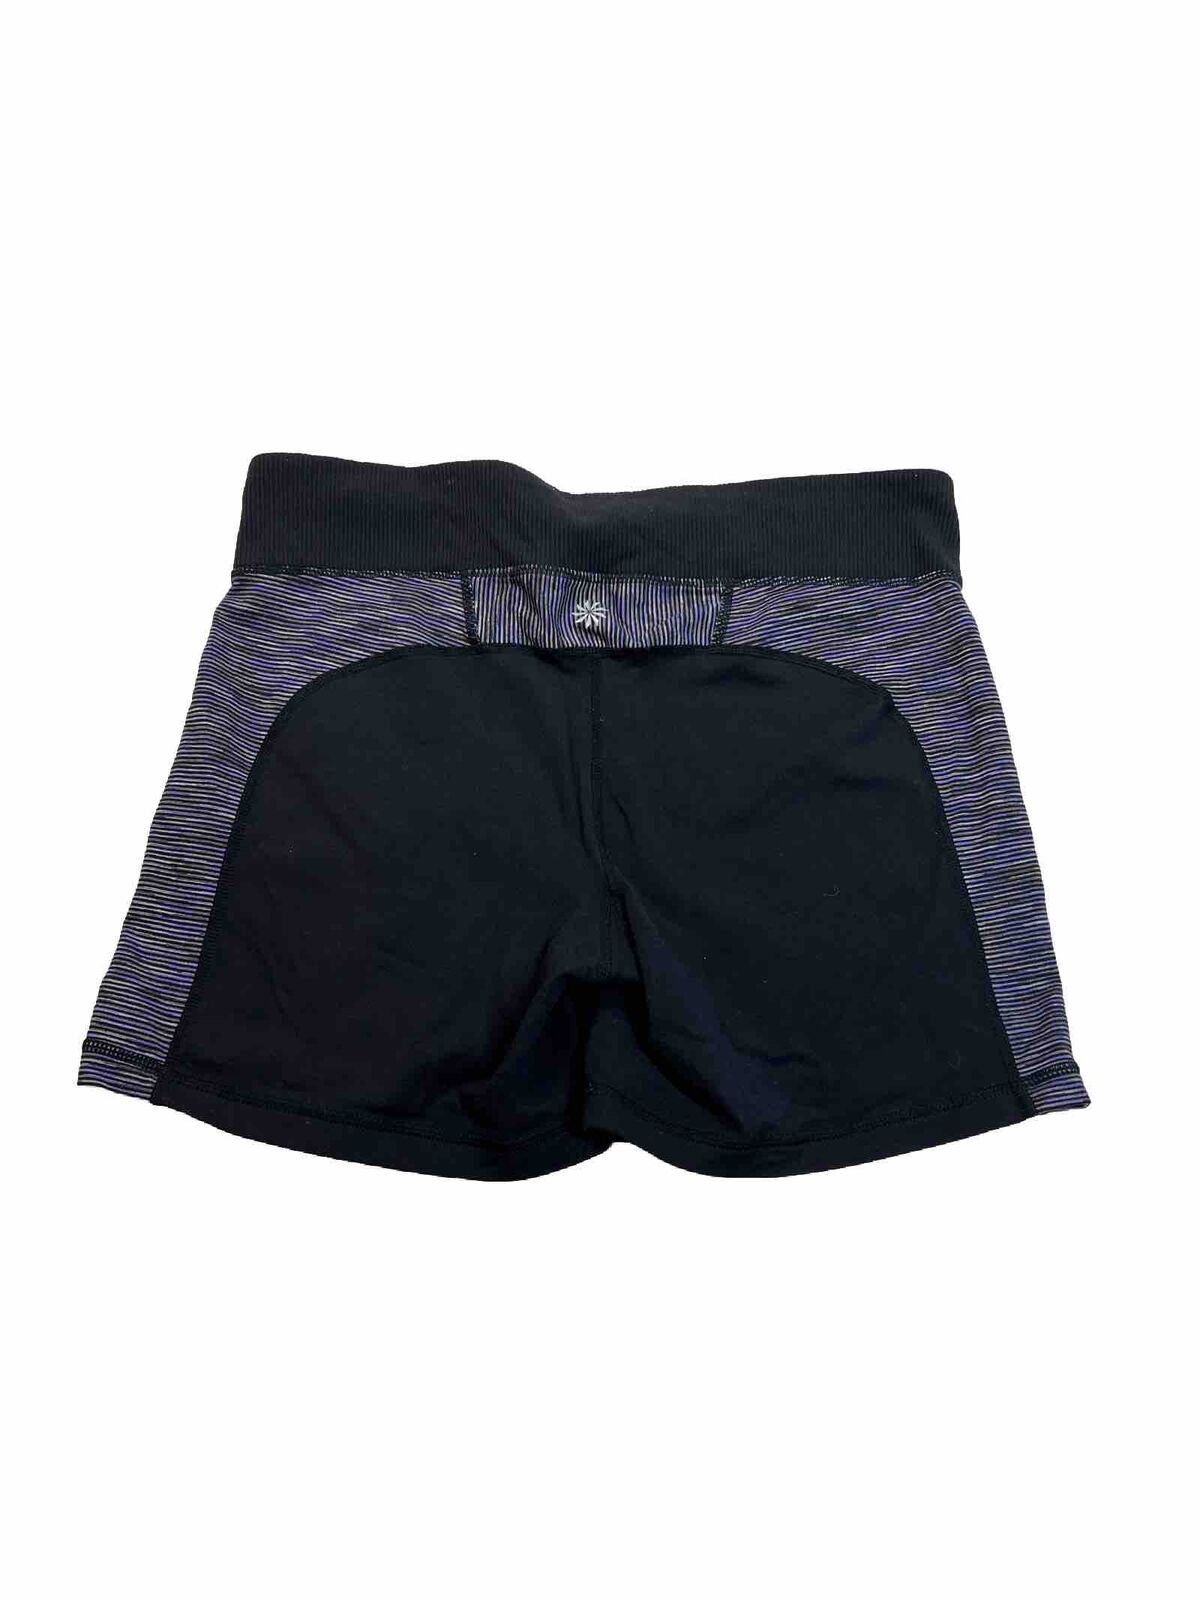 Athleta Women's Black/Purple Fitted Athletic Shorts - M